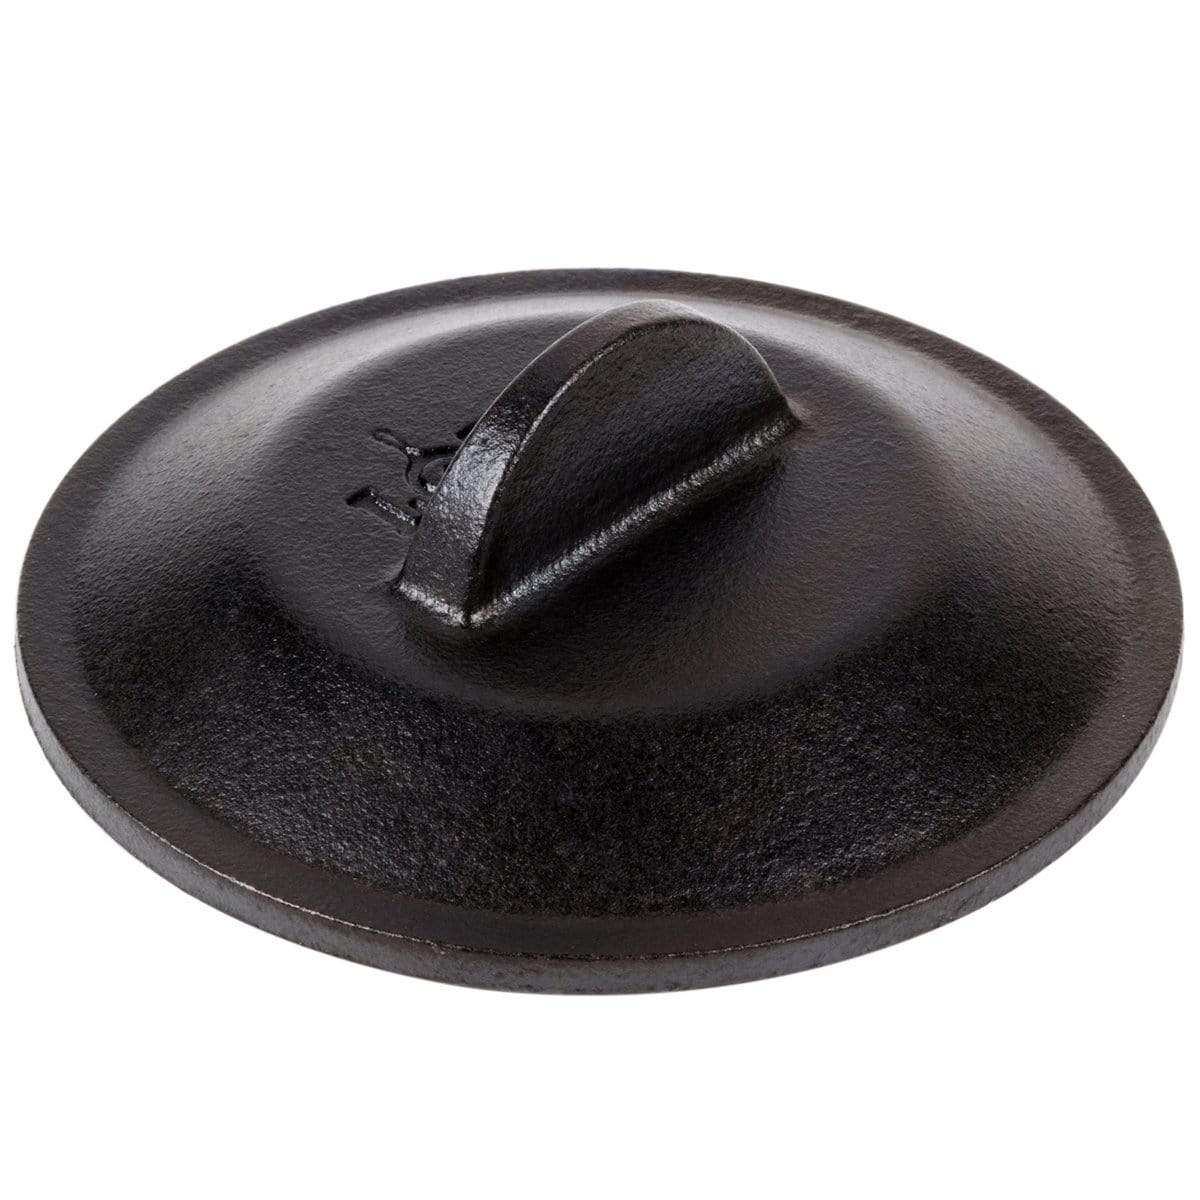 Lodge Heat Enhanced and Seasoned Cast Iron Skillet, 6.5-Inch, Black